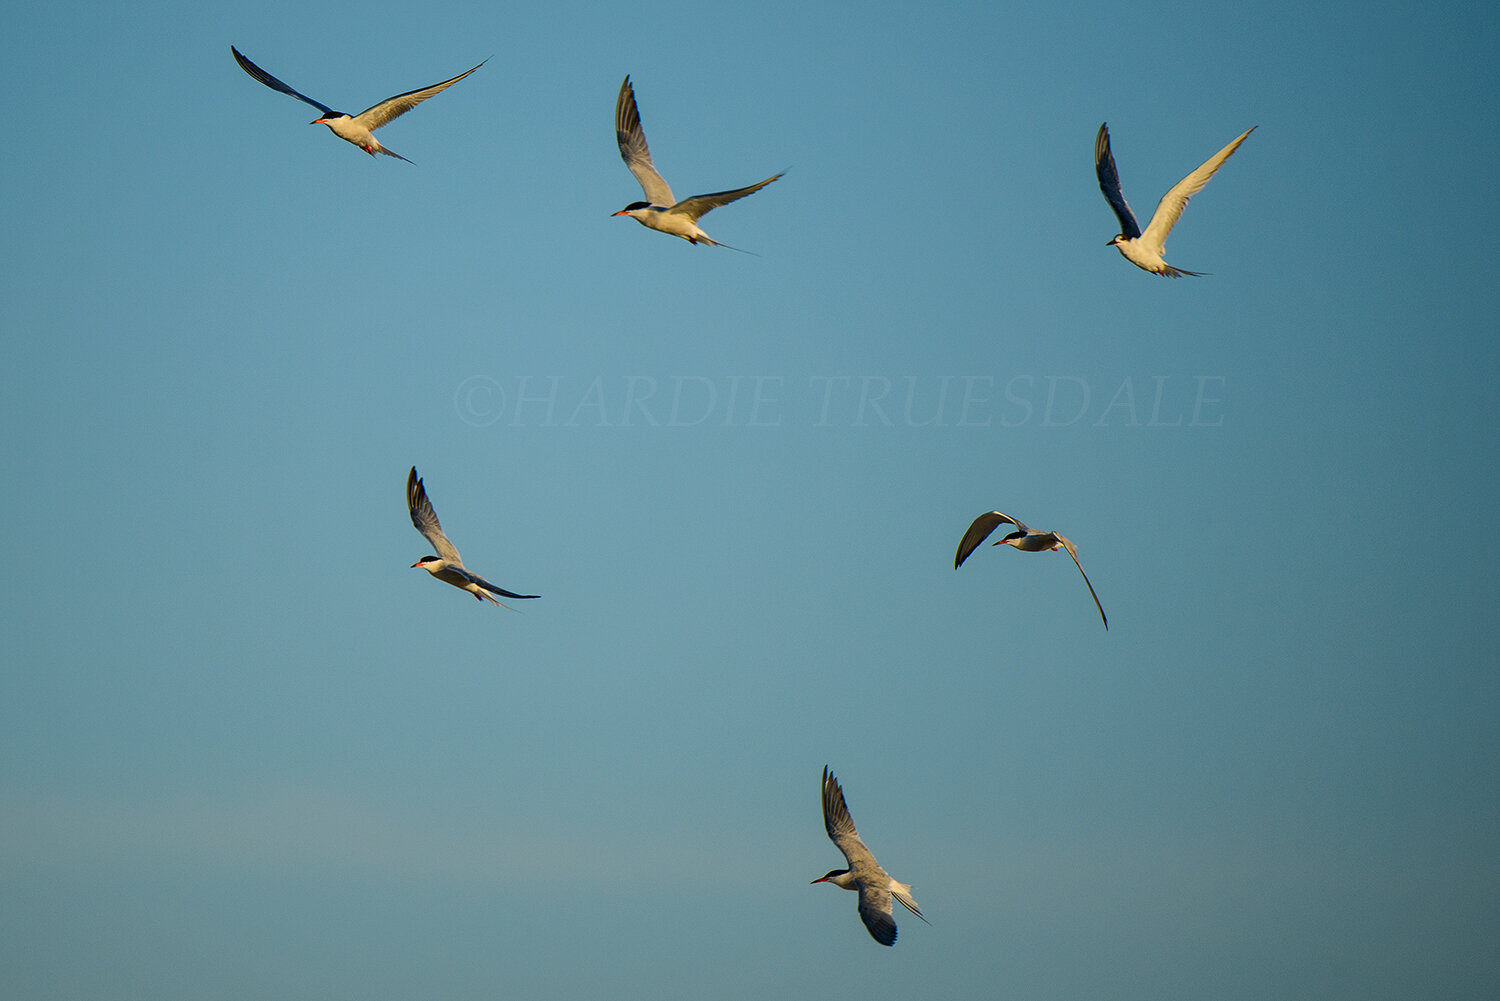 BrdNe#050 "Common Terns in Flight"